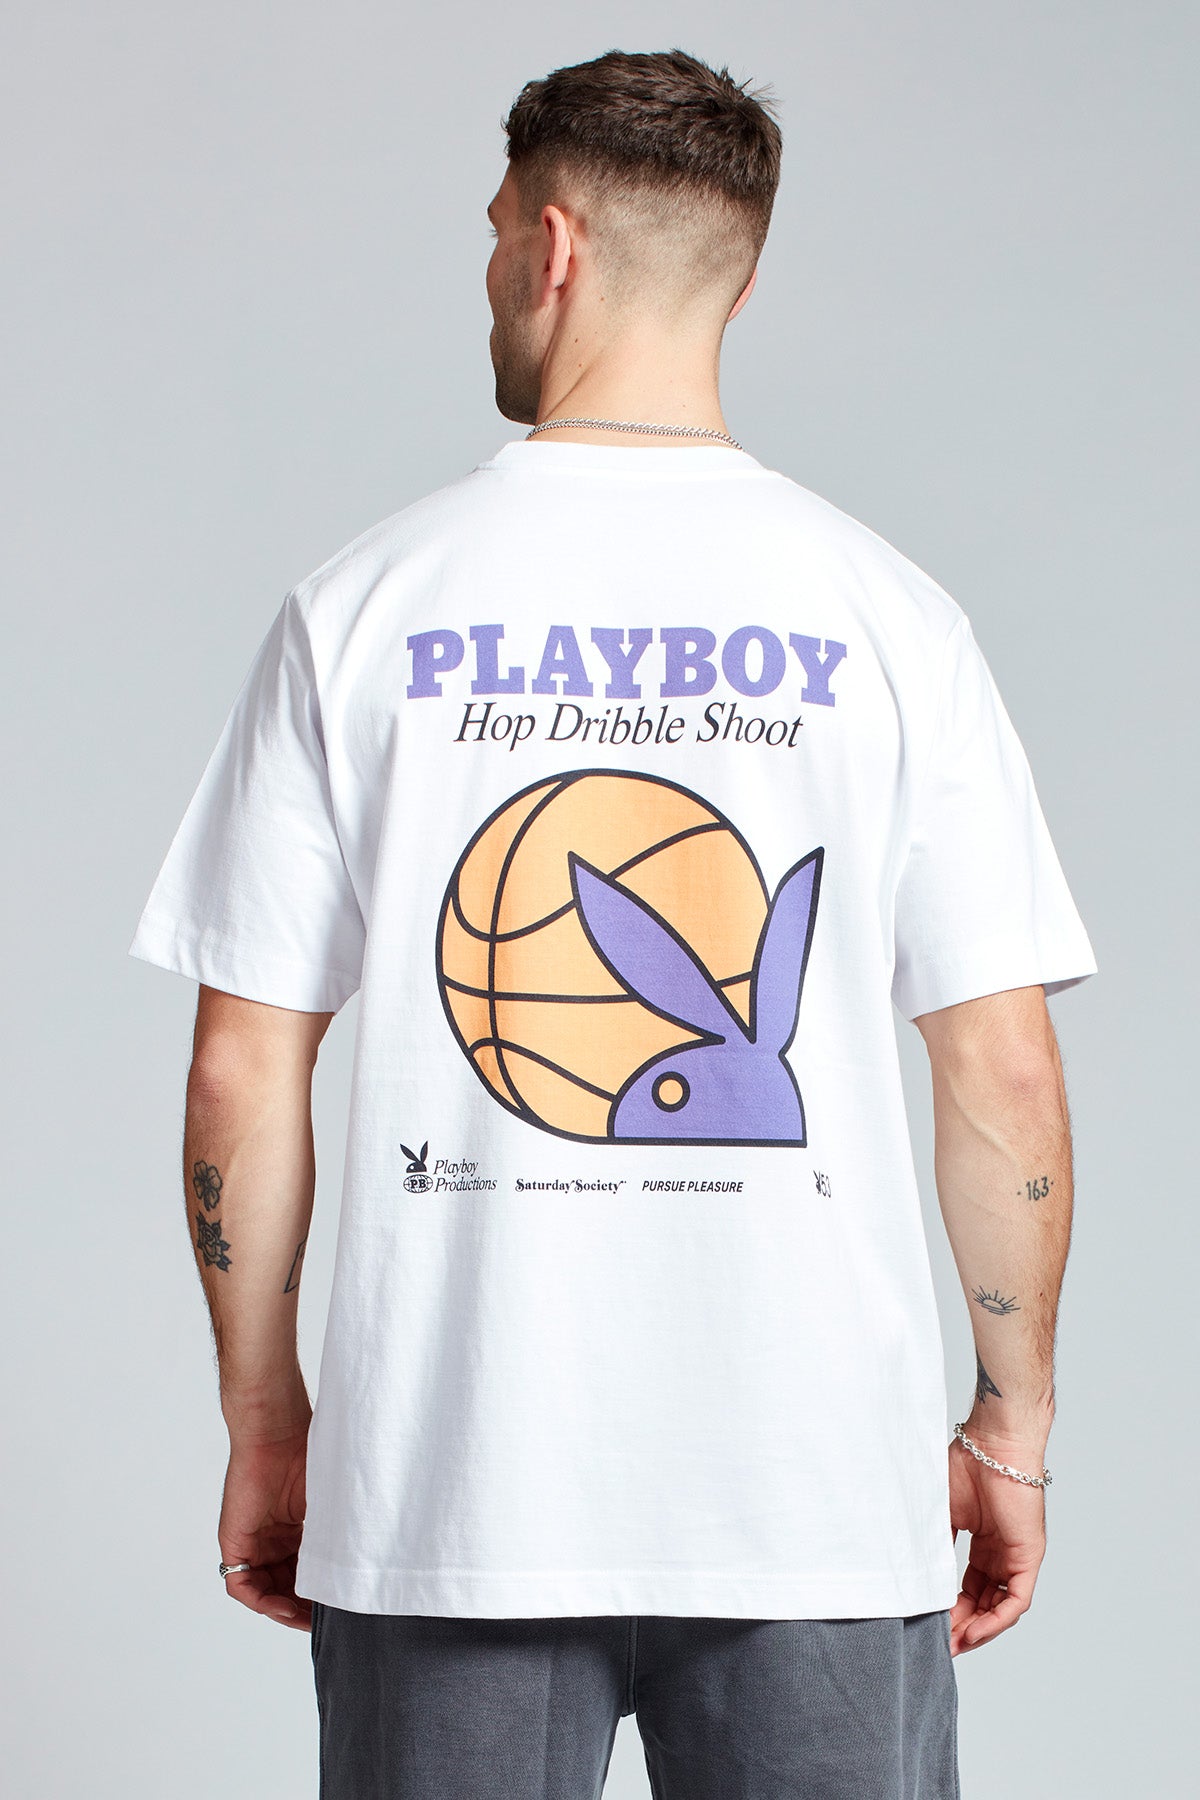 Playboy Hop Dribble Shoot T-shirt in White